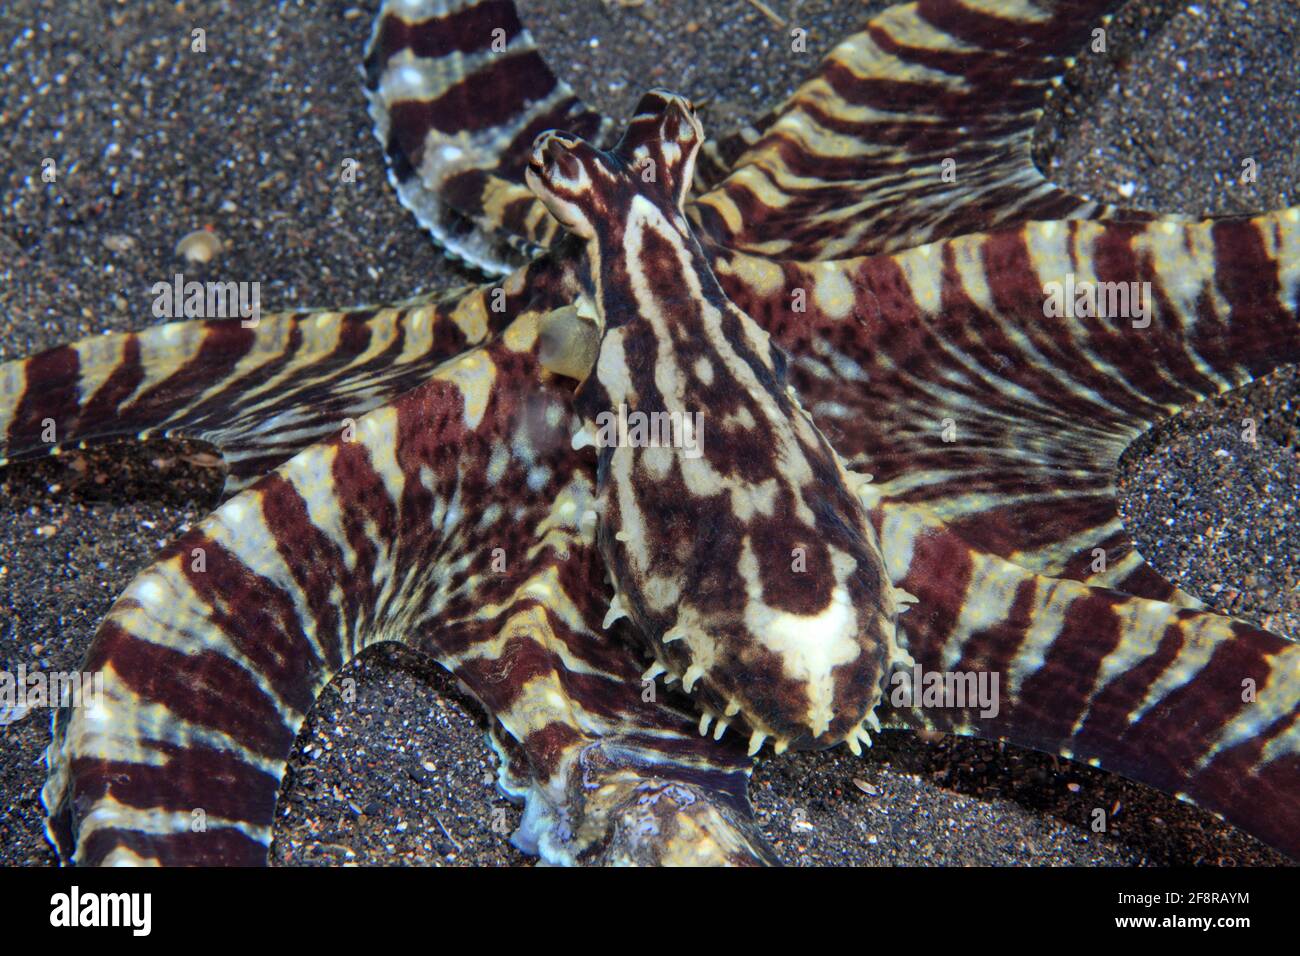 Mimikrykrake (Thaumoctopus mimicus) am Sandgrund (Lembeh, Sulawesi, Indonesien) - Mimic Octopus (Lembeh, Sulawesi,  Indonesia) Stock Photo